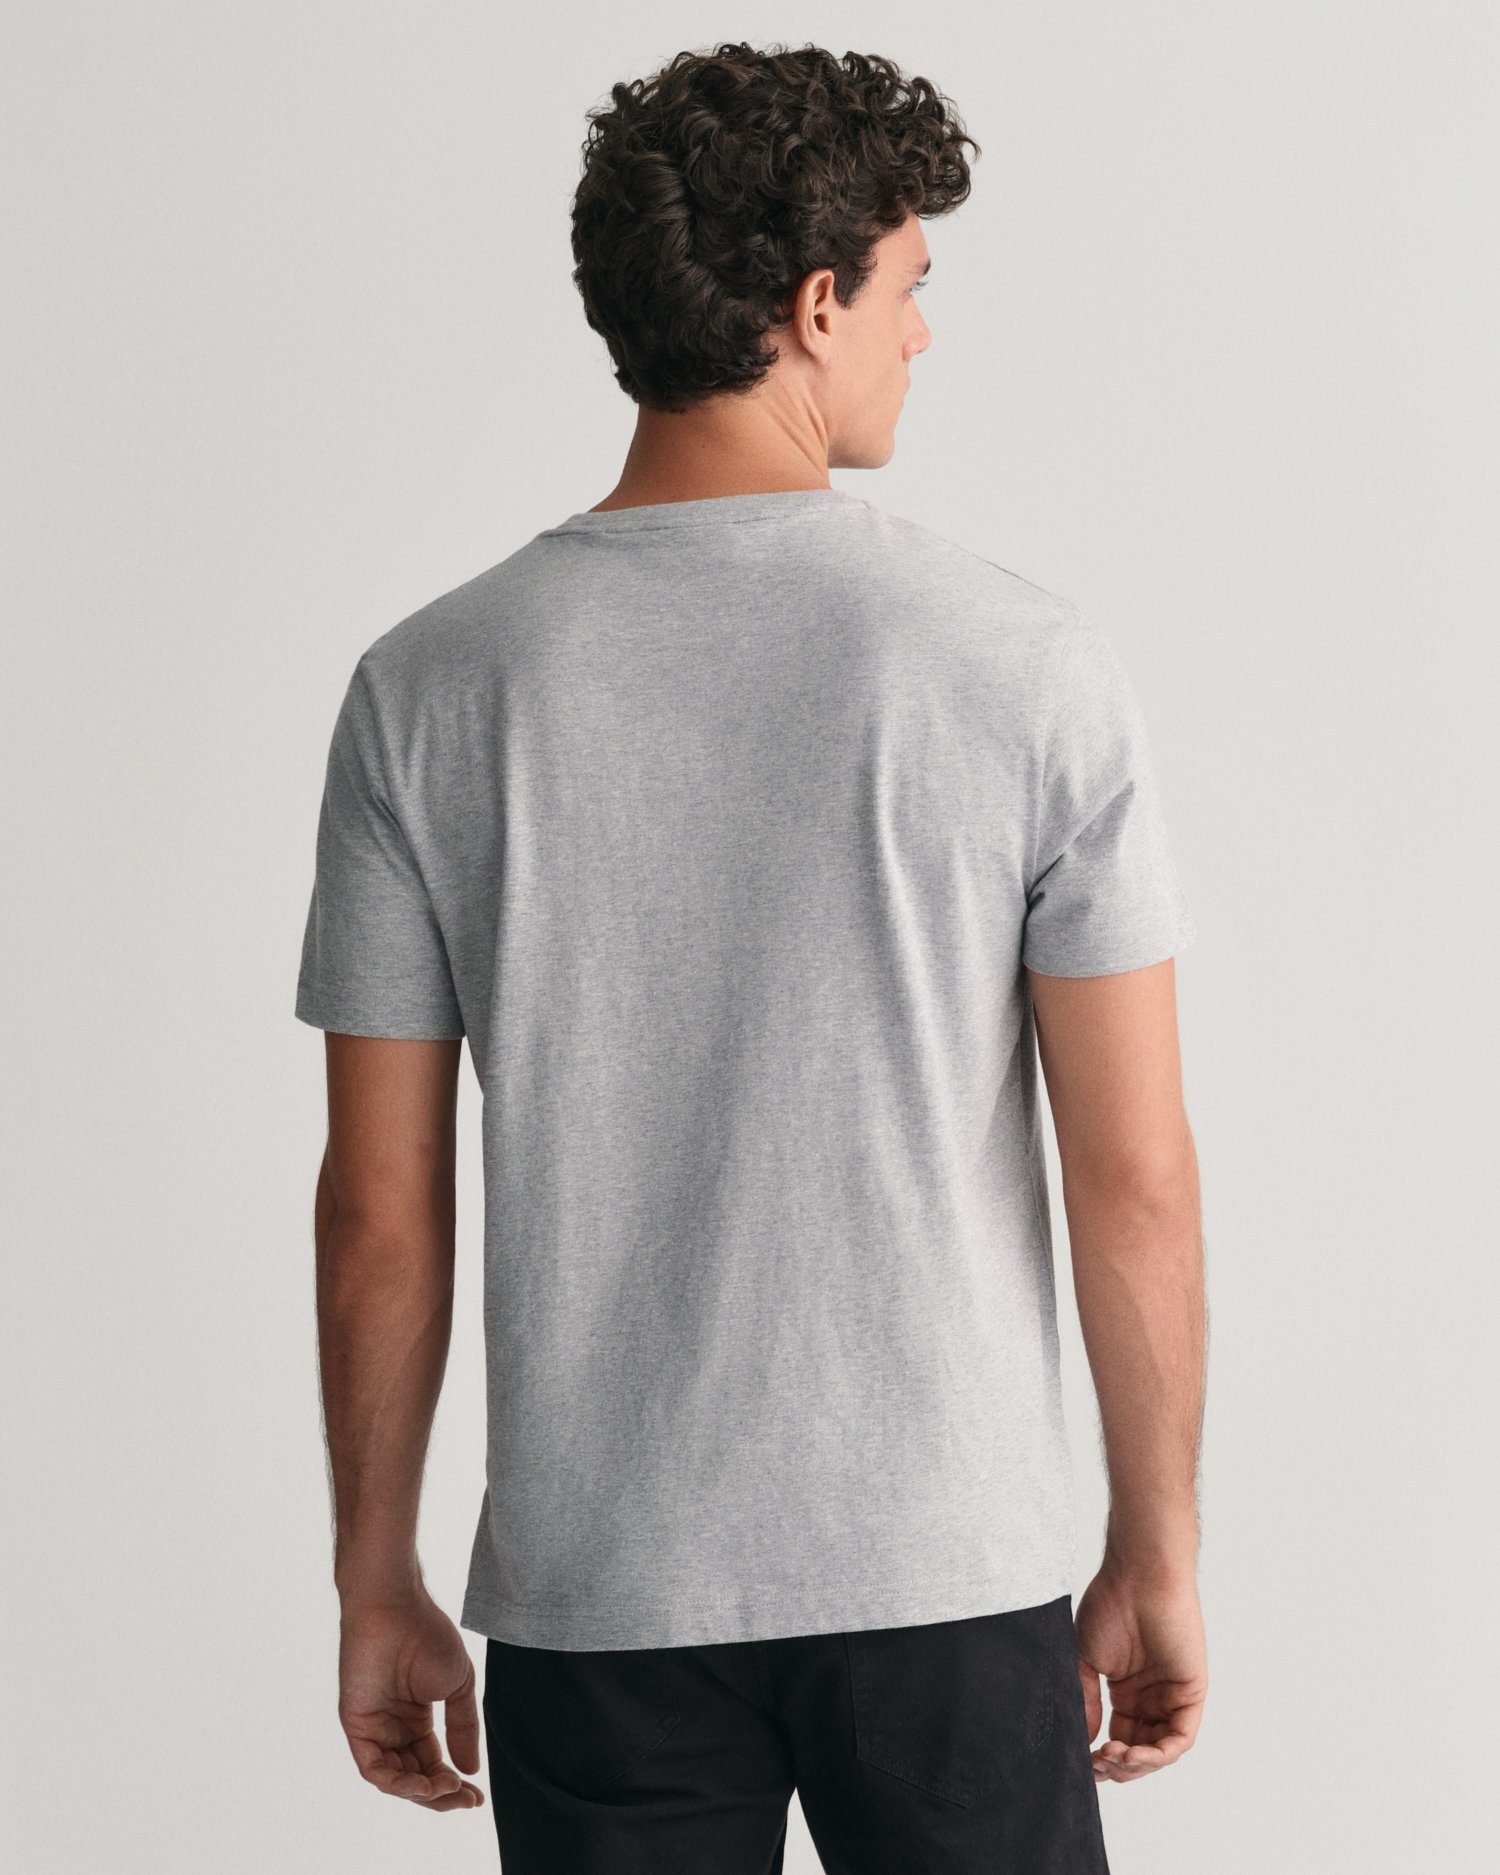 T-Shirt GRAPHIC MELANGE T-SHIRT Gant GREY G